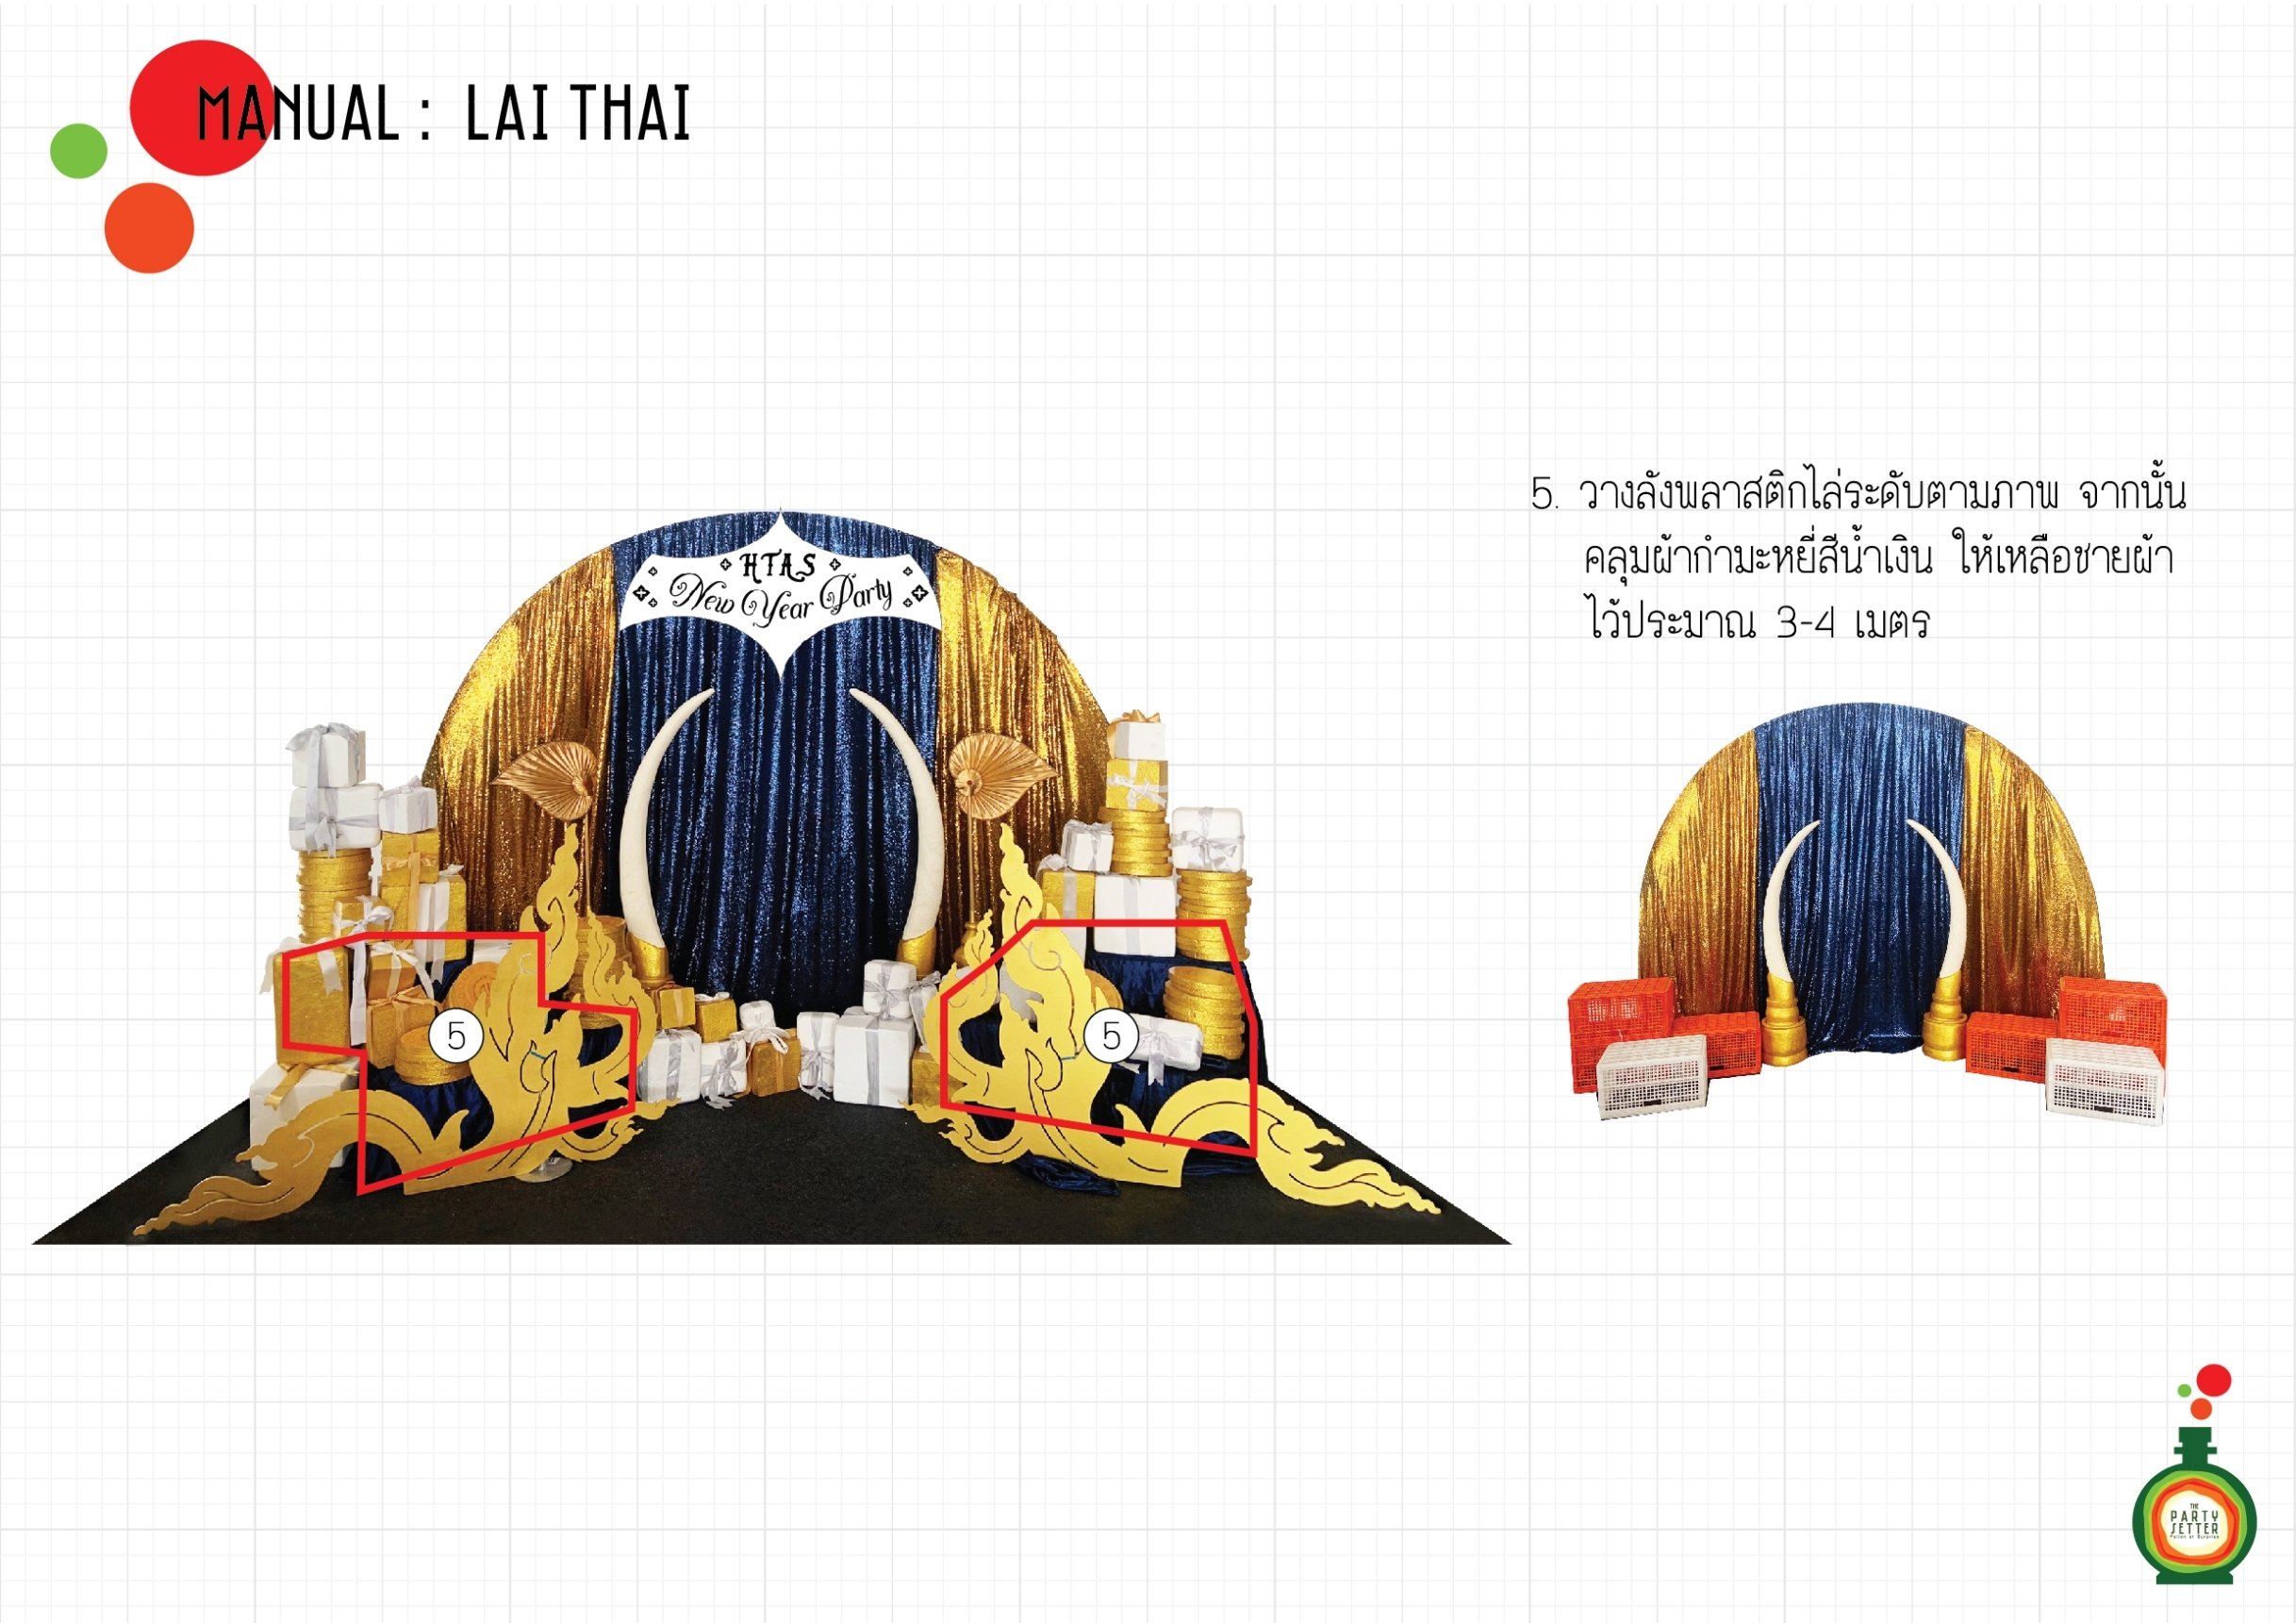 Manual_Lai Thai_05-01.jpg